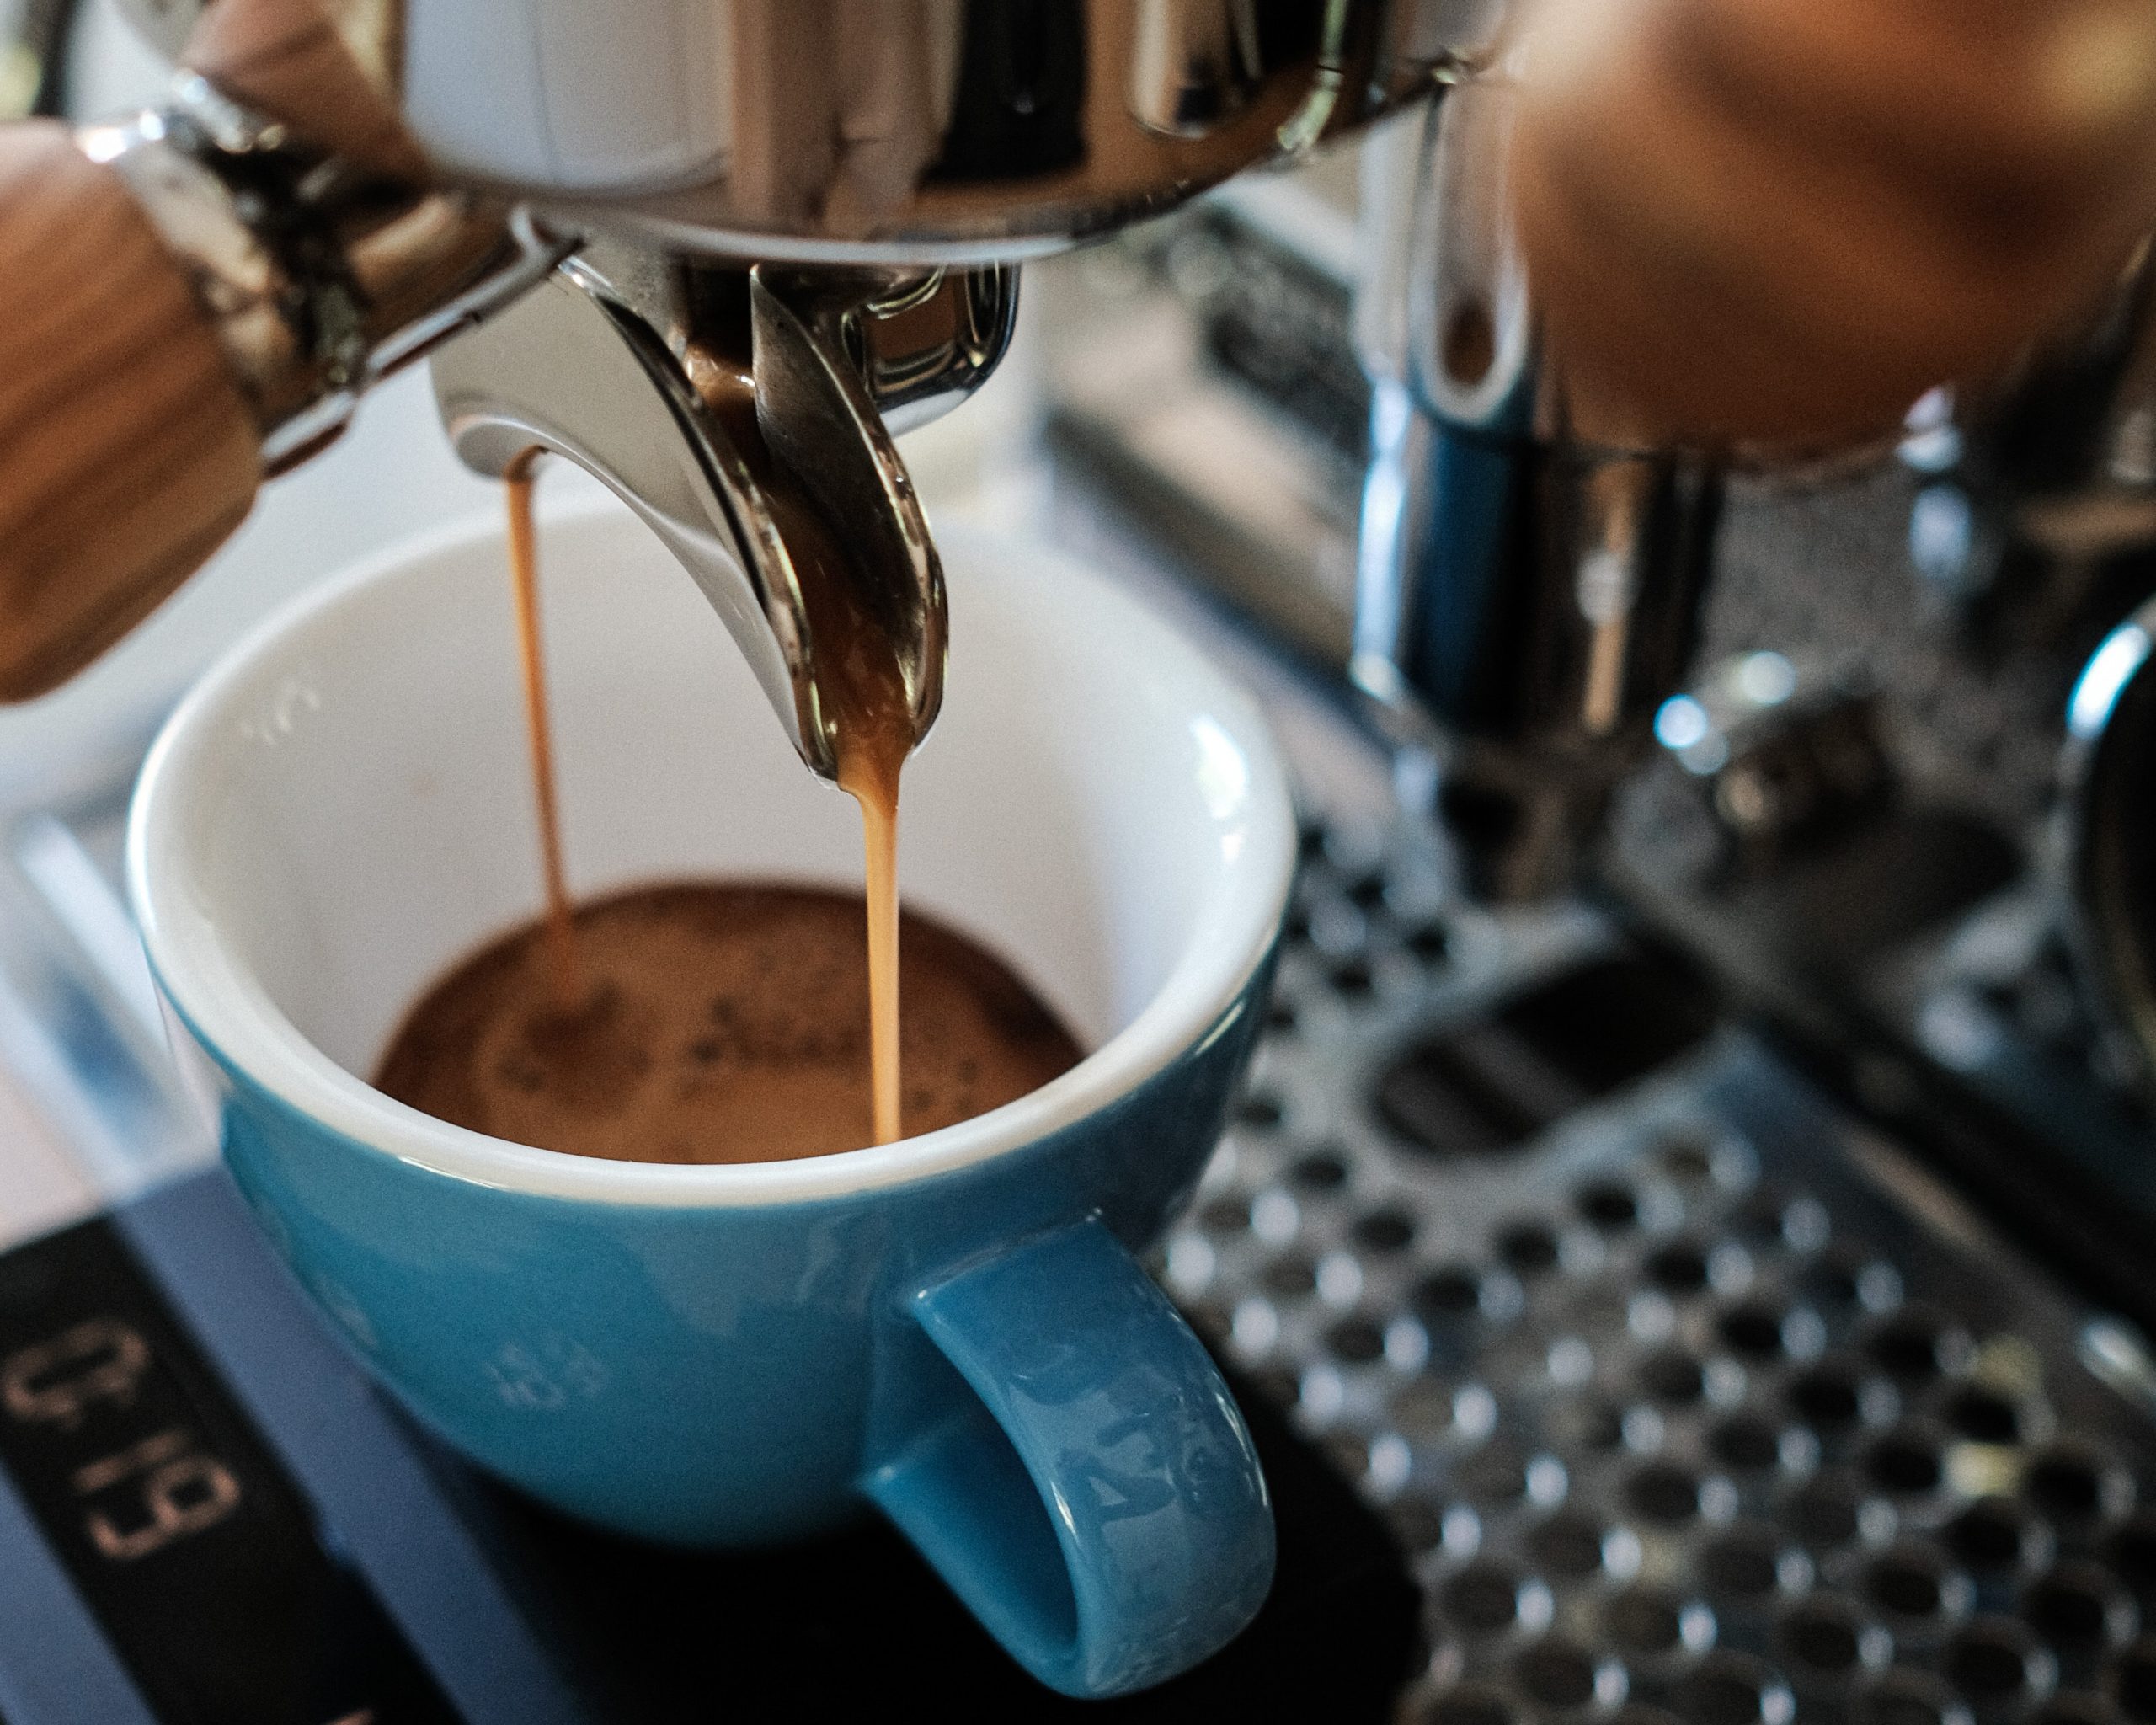 espresso, kava, kofein, šalica kave